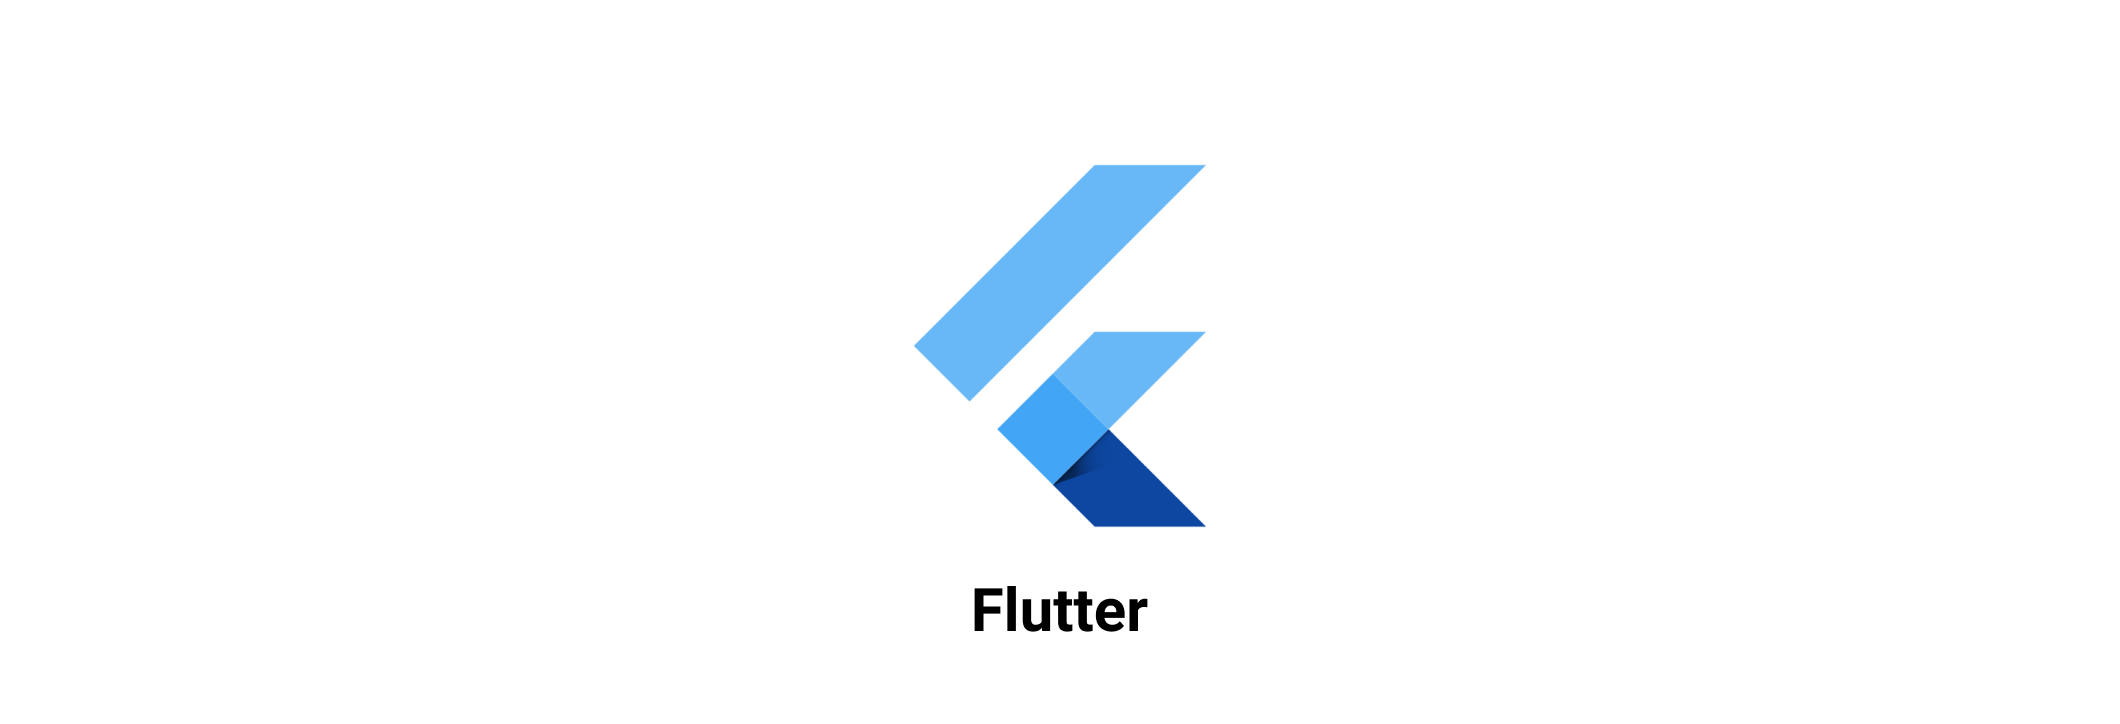 Best Android Development Tools flutter